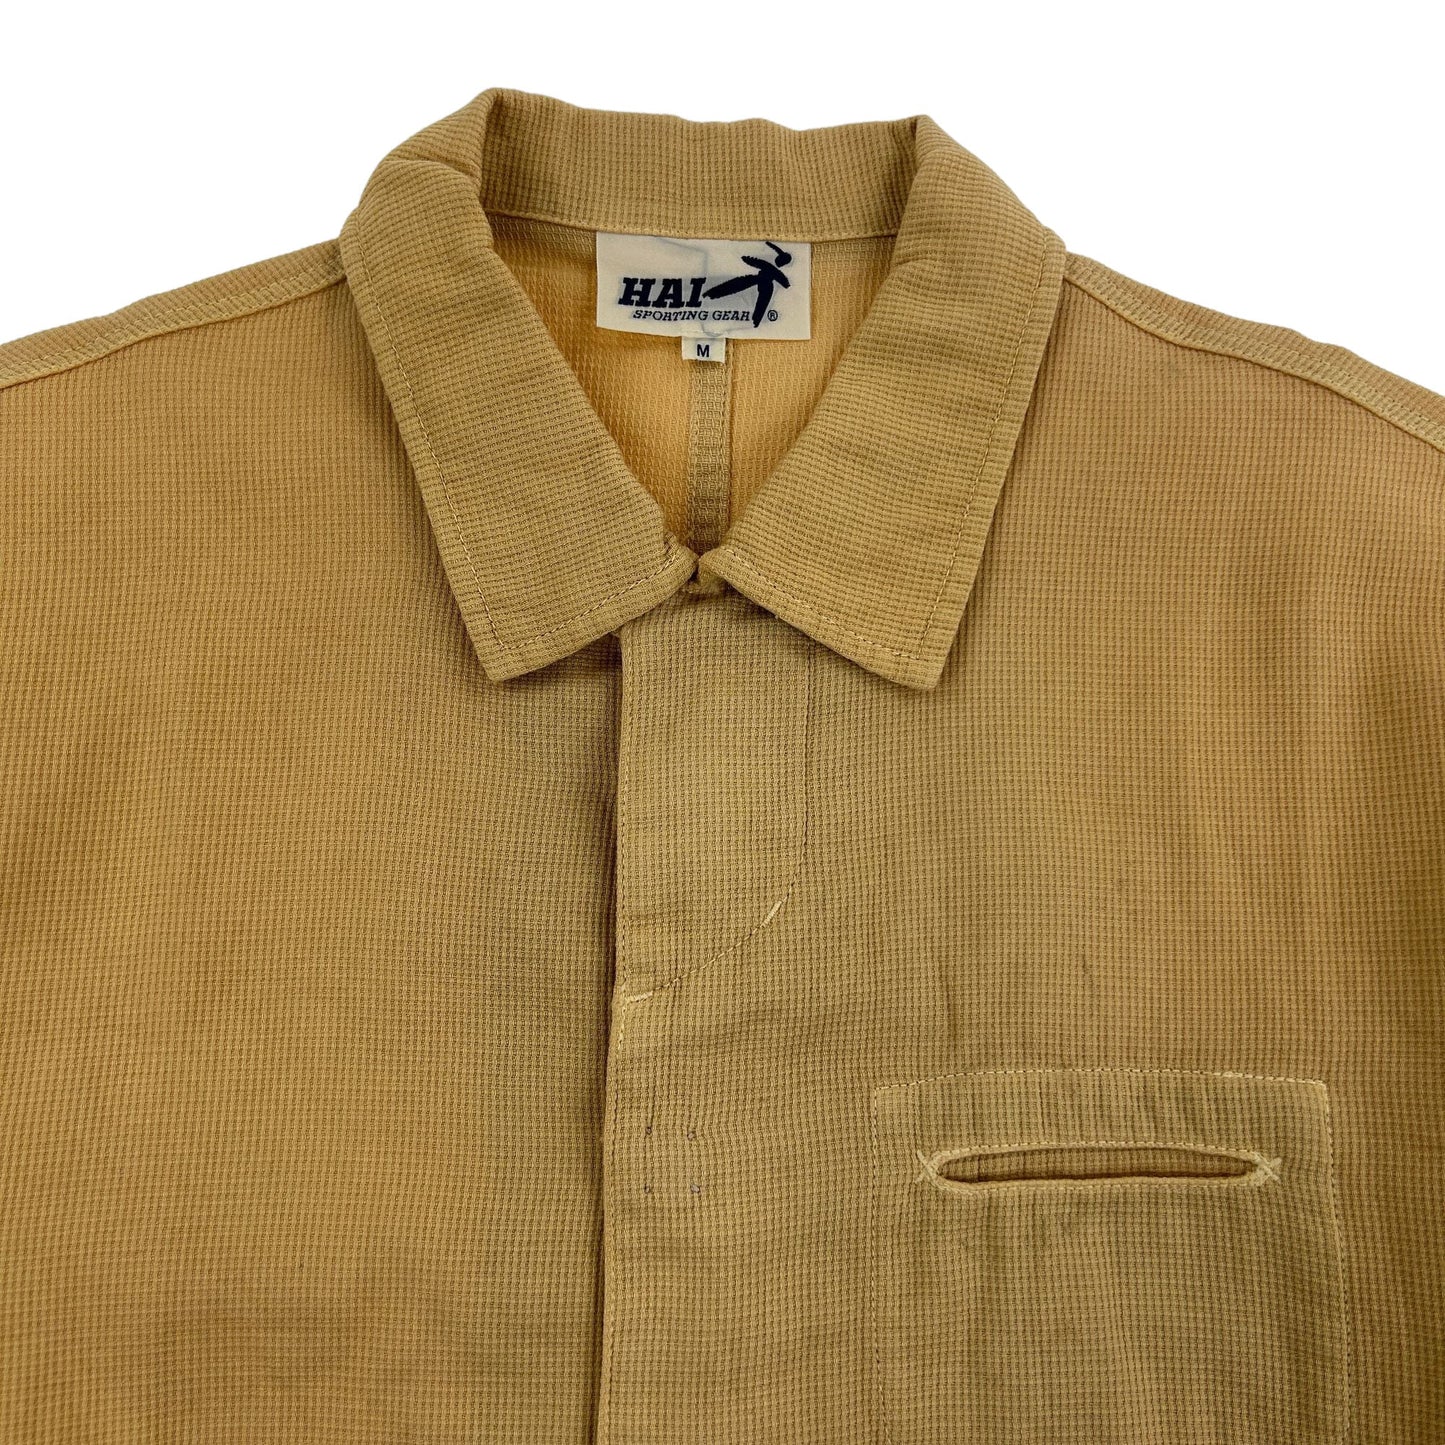 Vintage HAI By Issey Miyake Jacket Size S